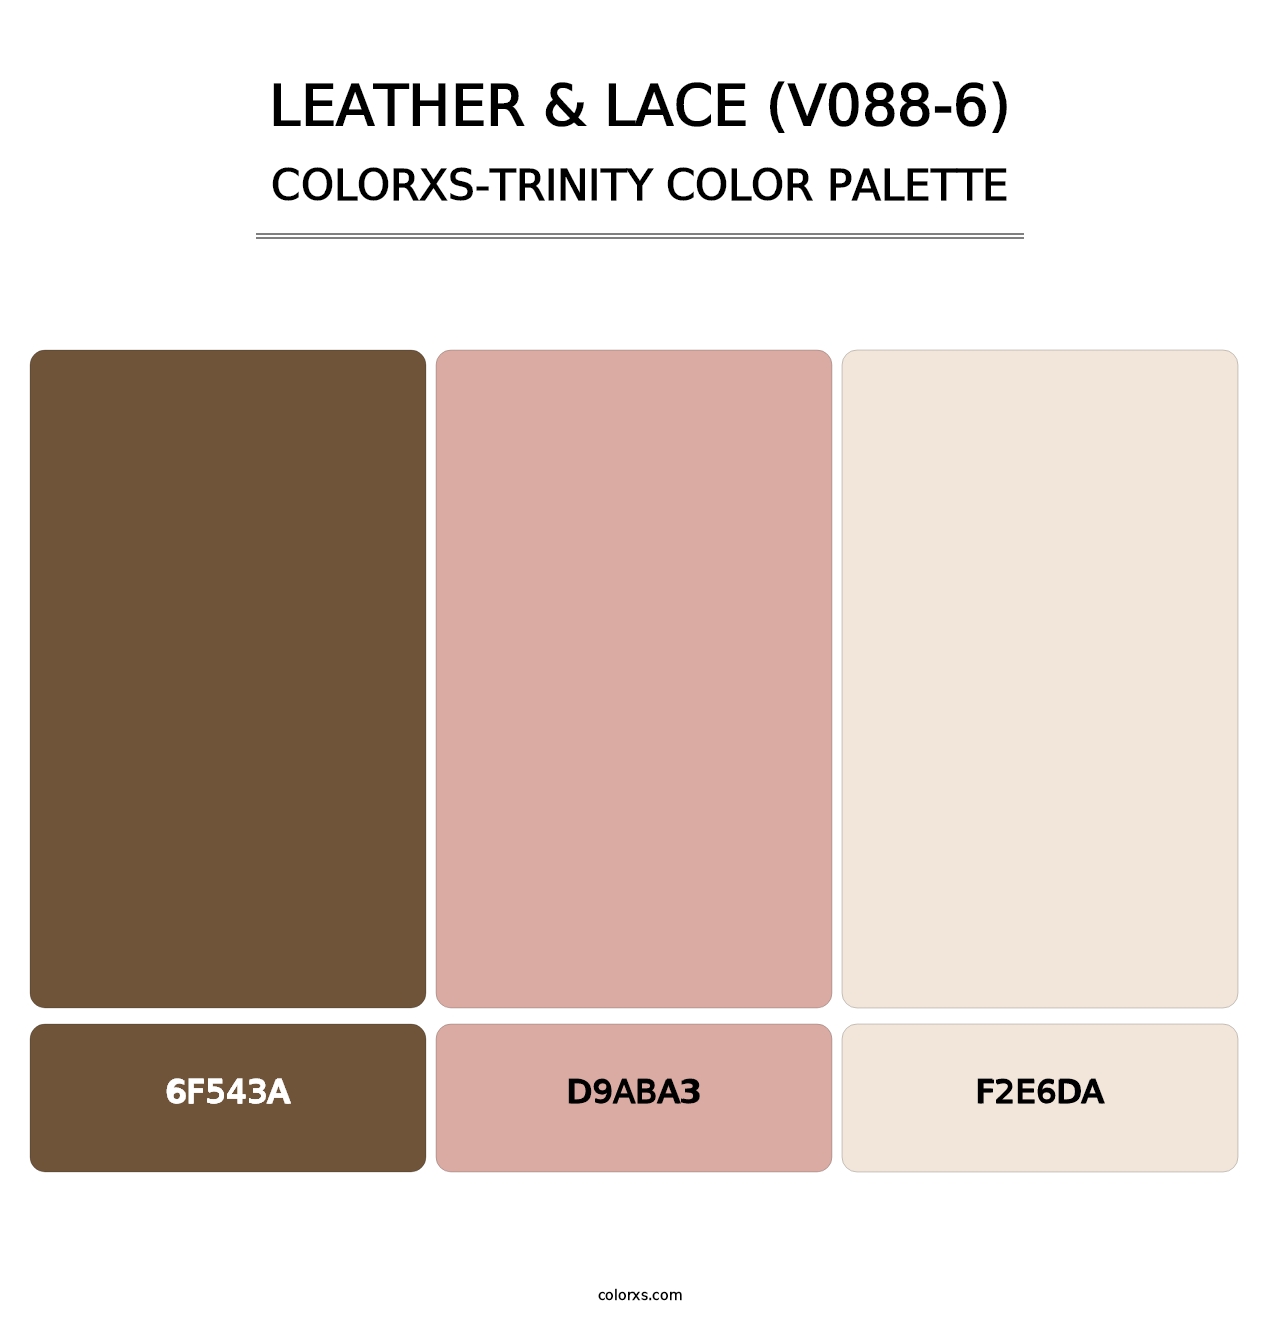 Leather & Lace (V088-6) - Colorxs Trinity Palette